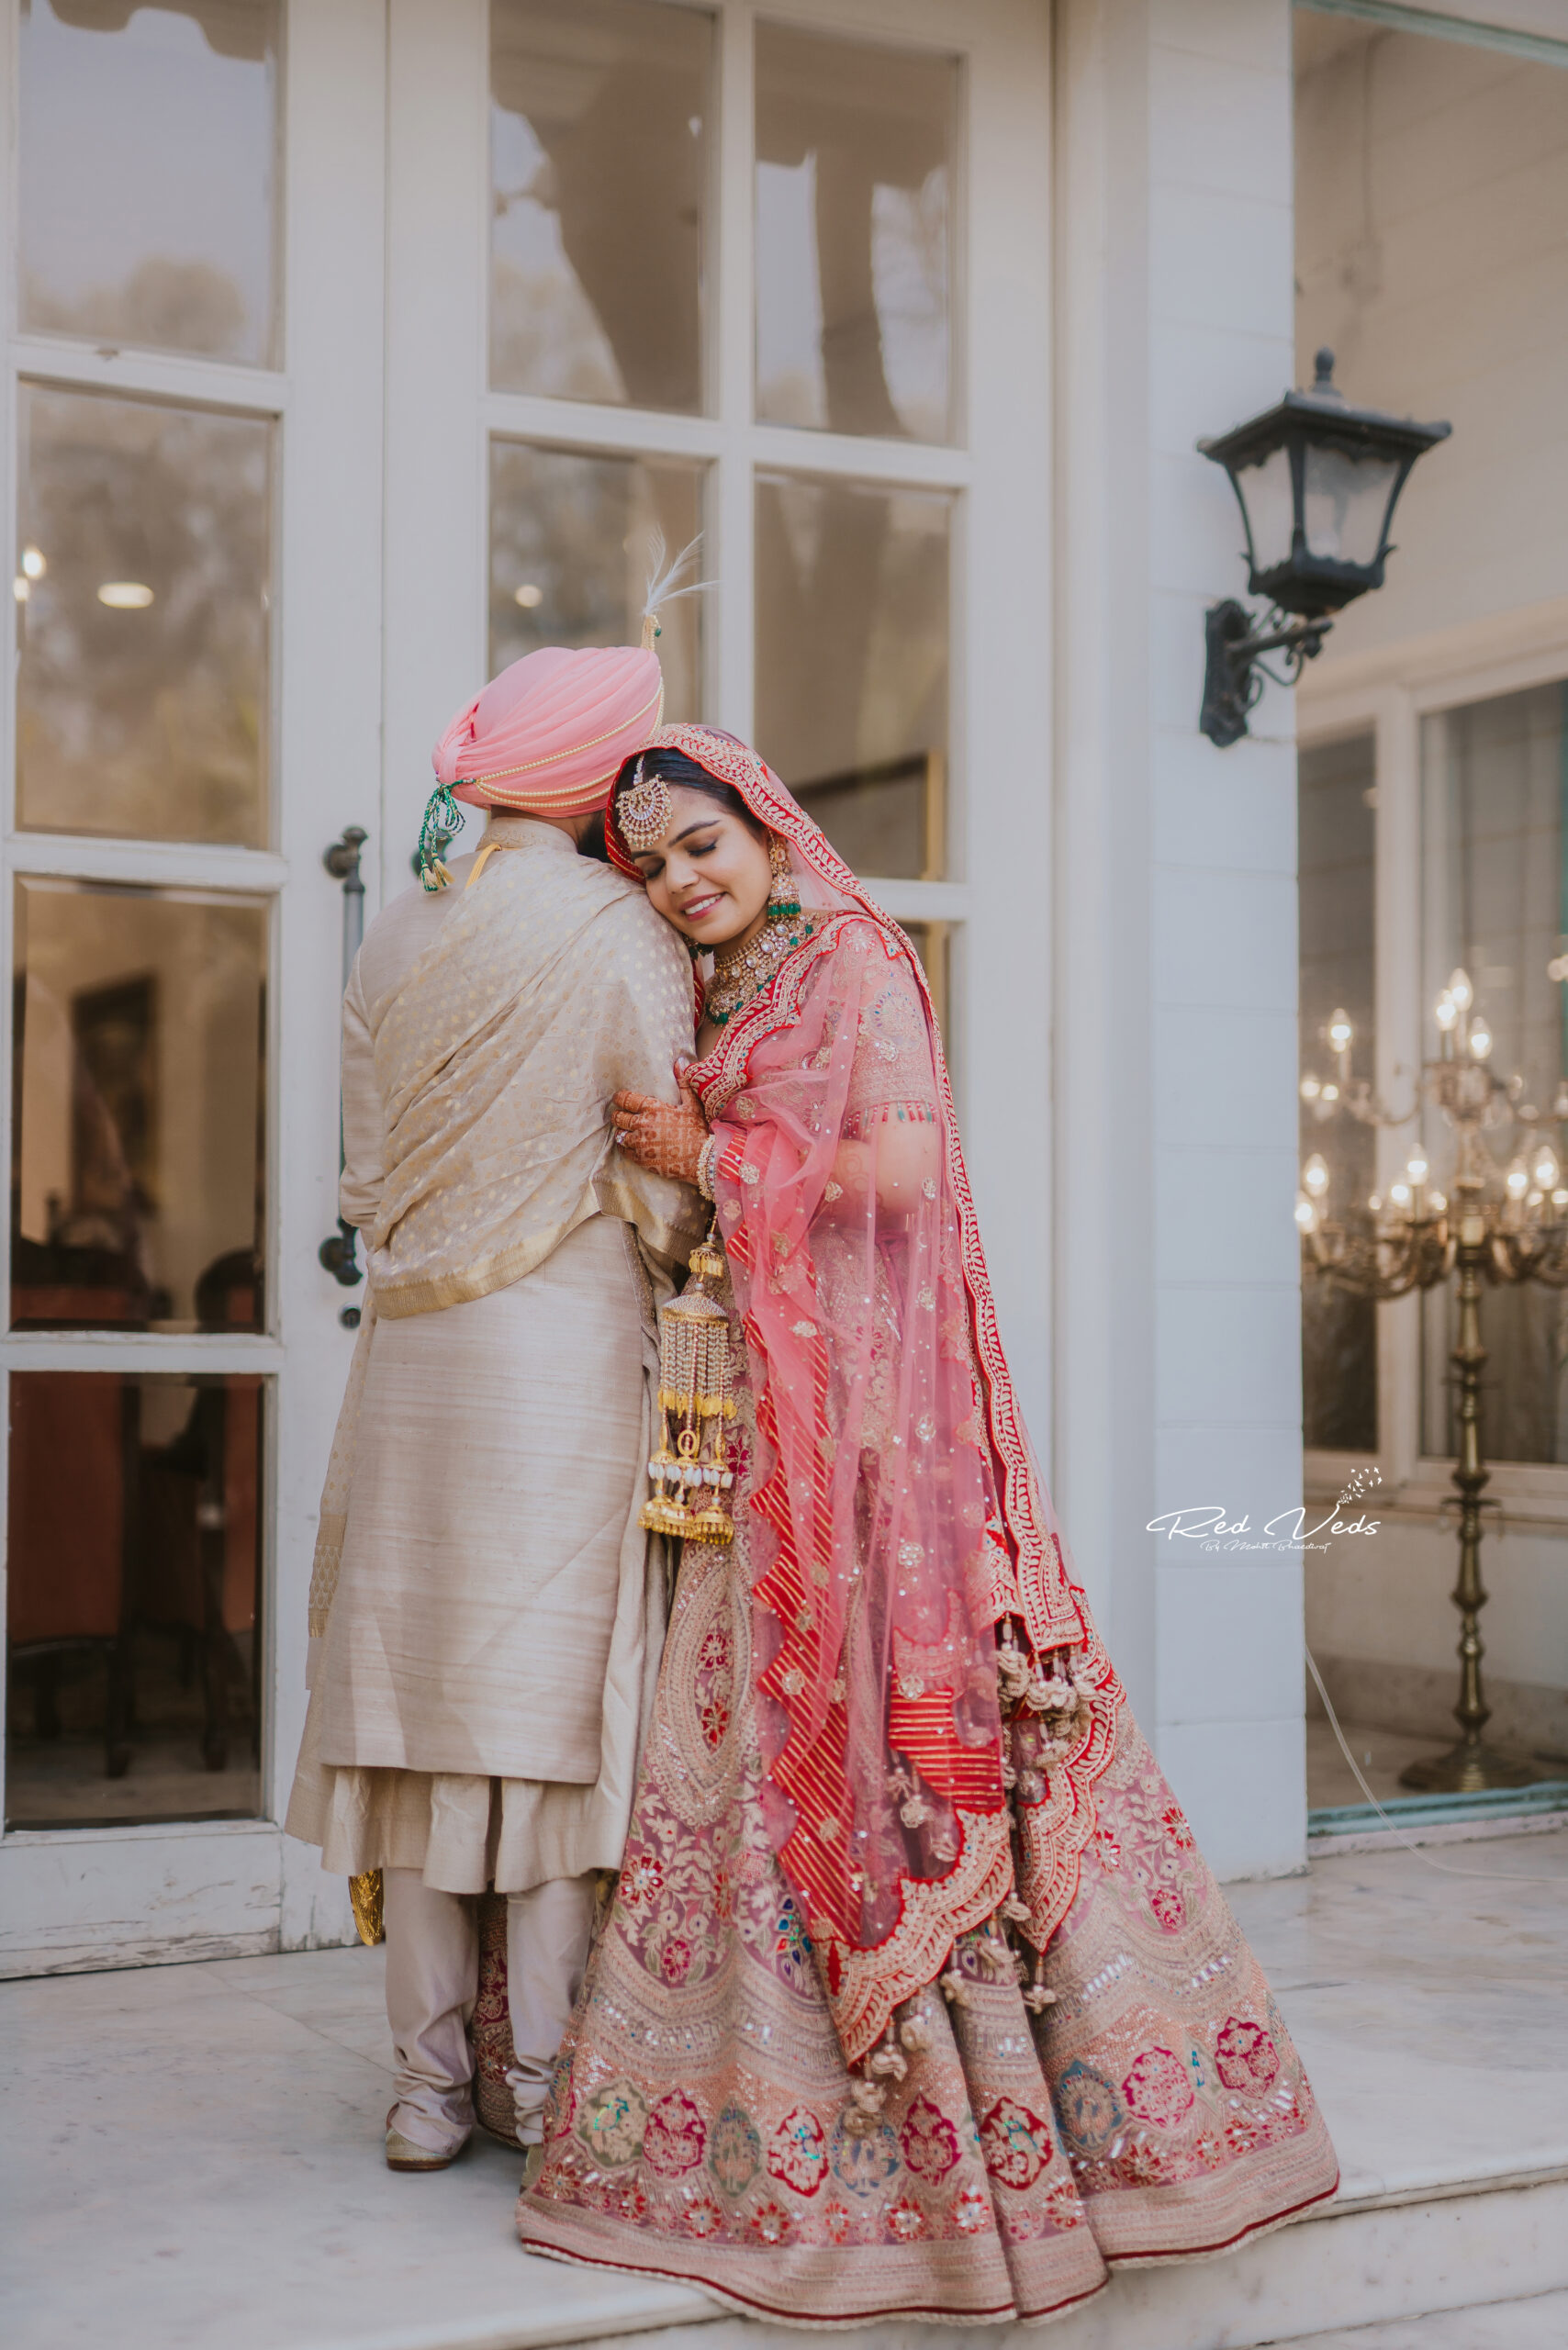 Groom Portrait Shoot | Indian wedding poses, Marriage poses, Groom  photoshoot